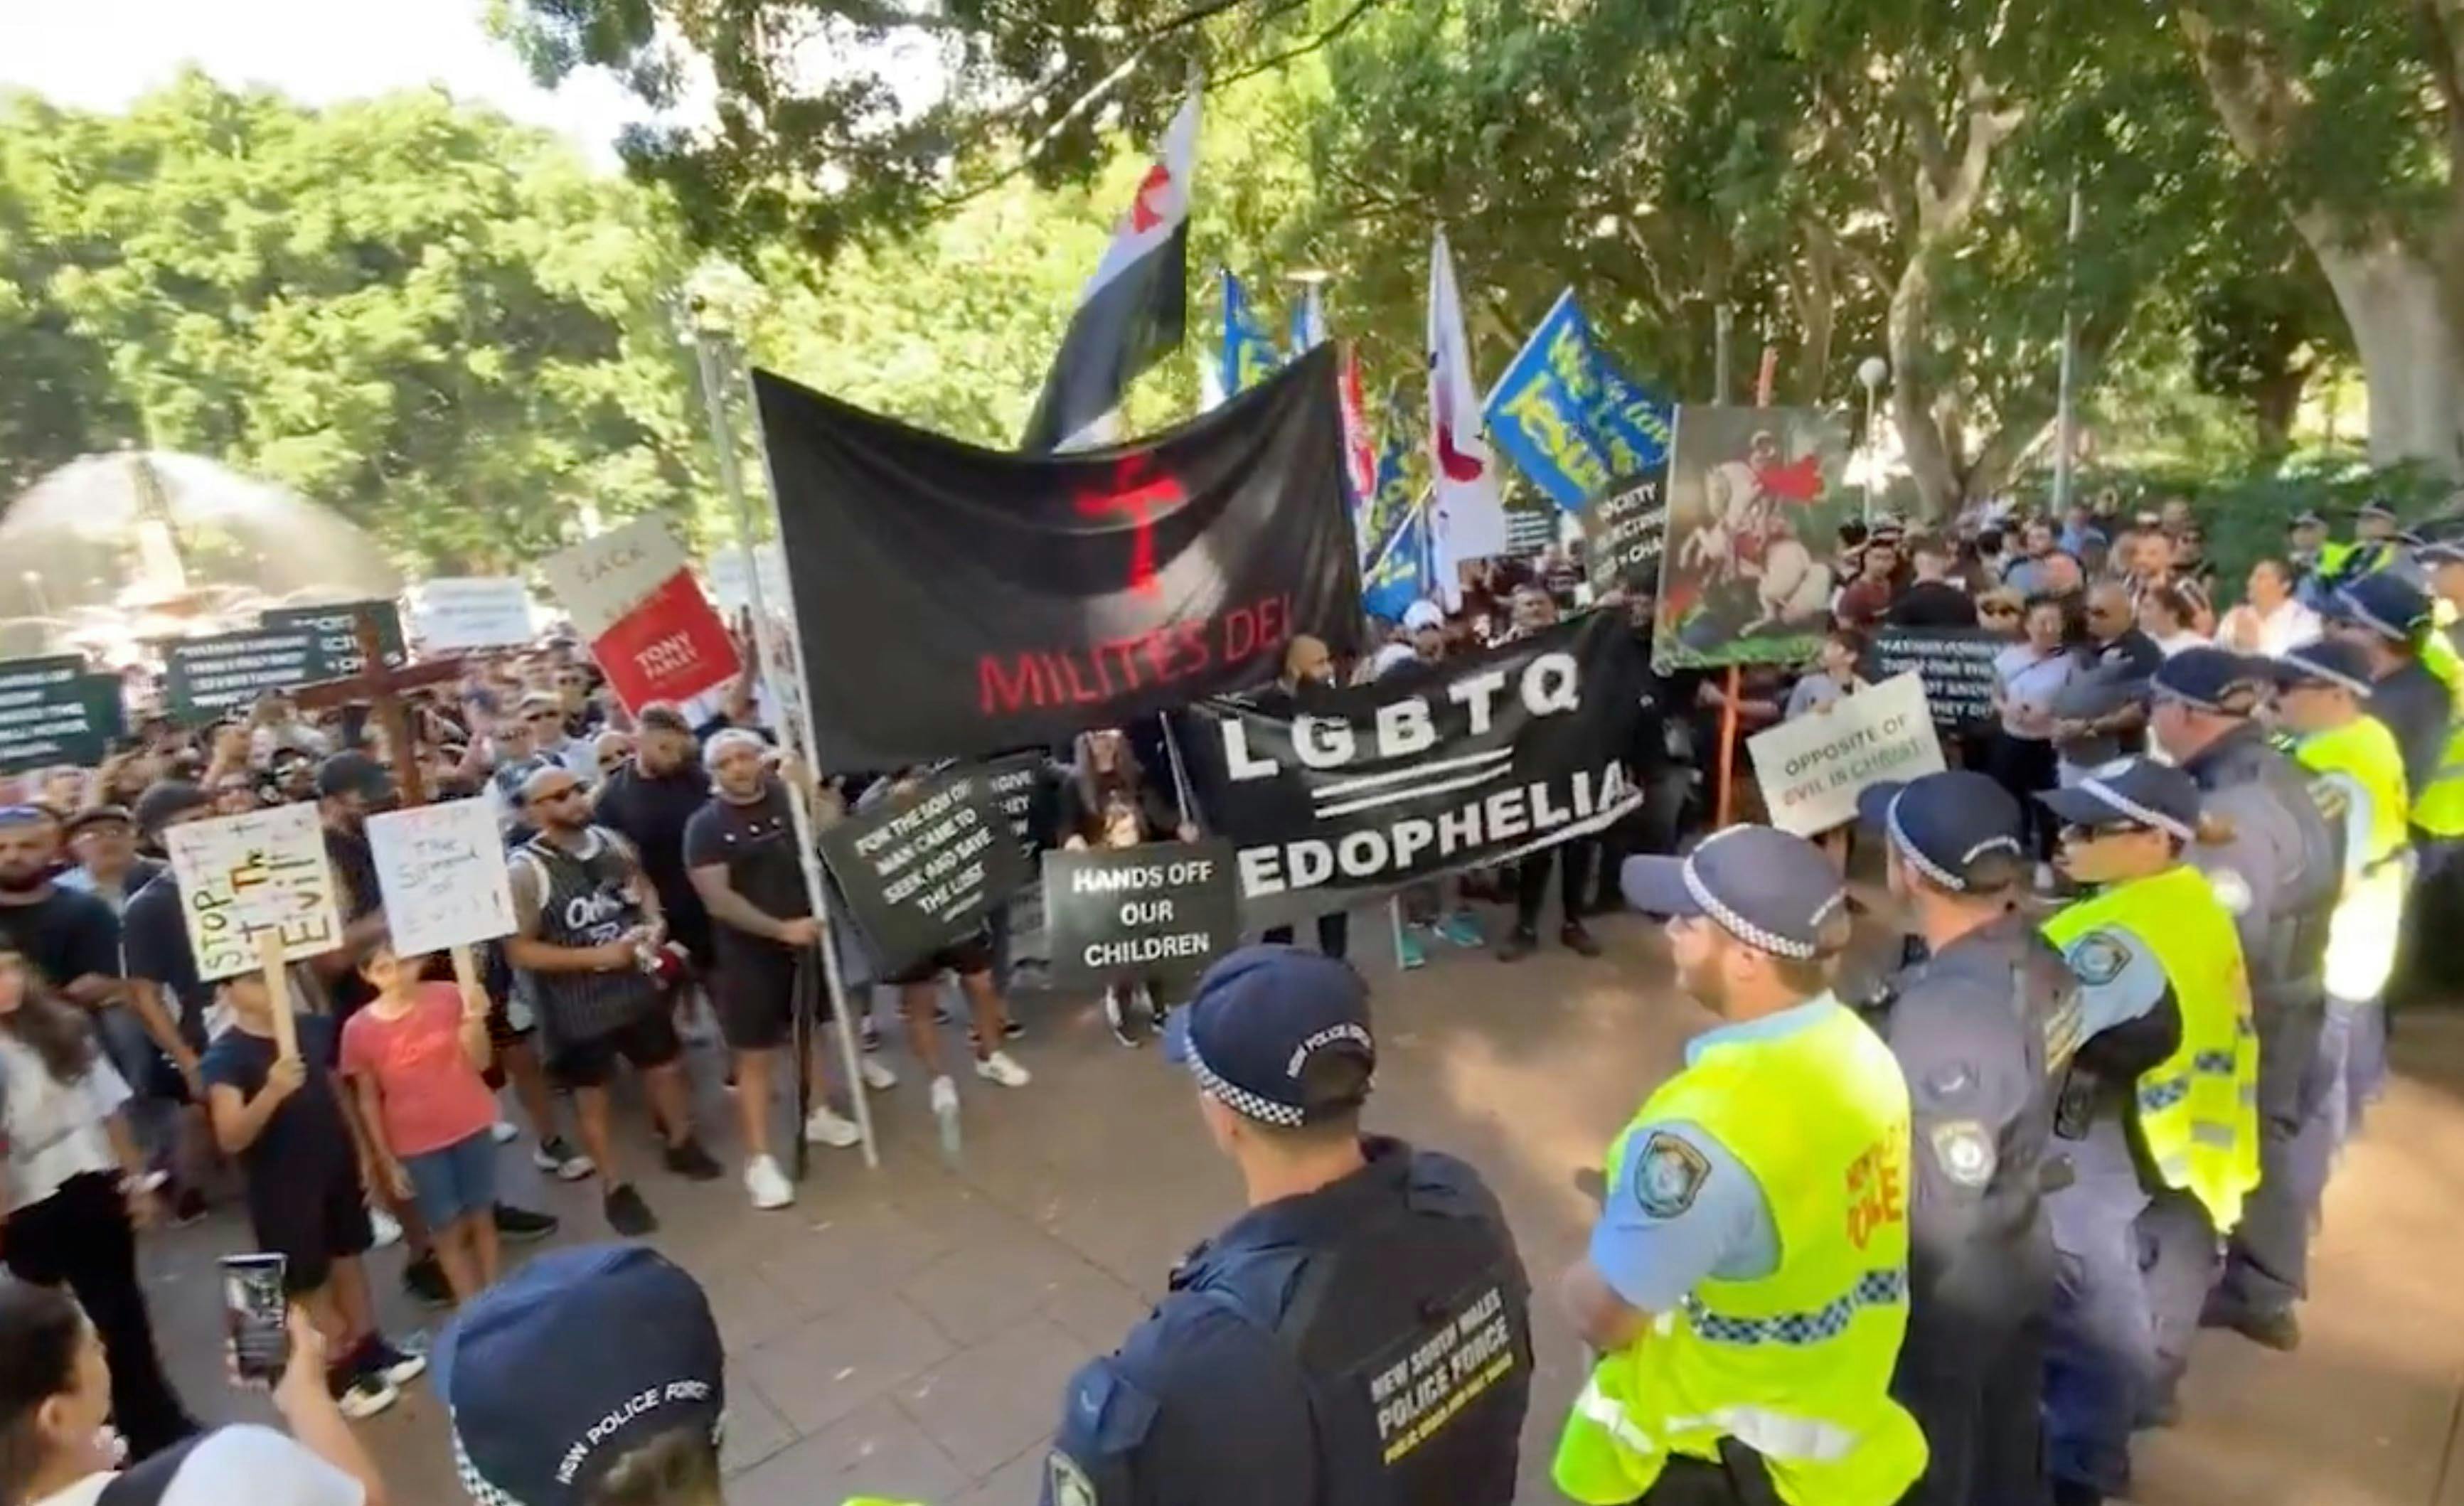 Thousands attend far-right anti-LGBTI rally in Sydney